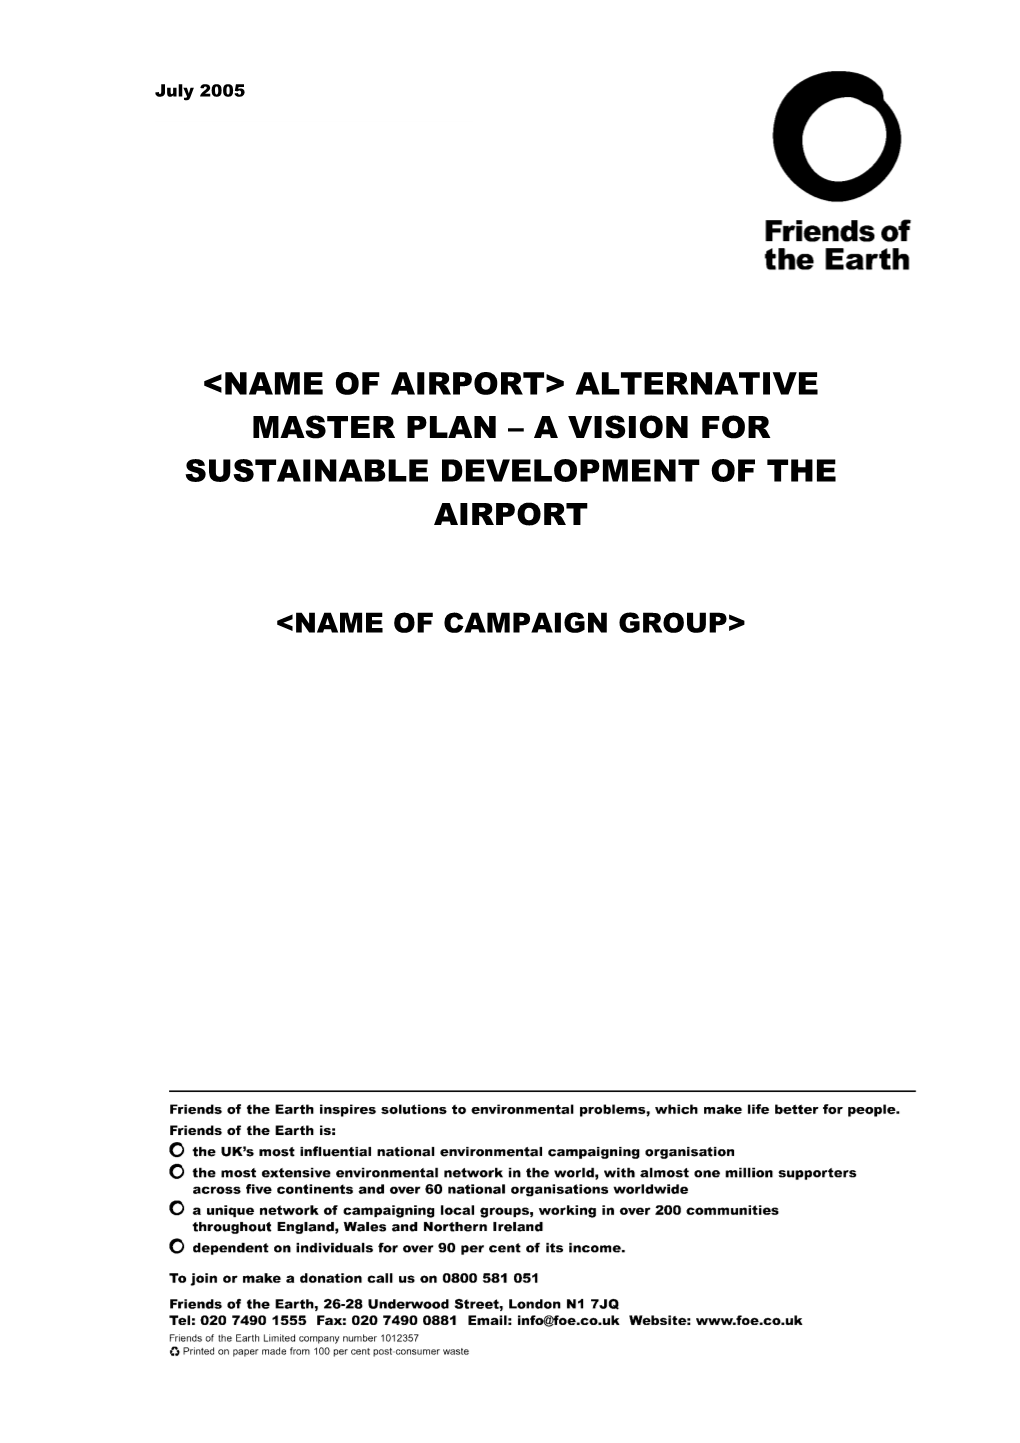 Alternative Airport Master Plan